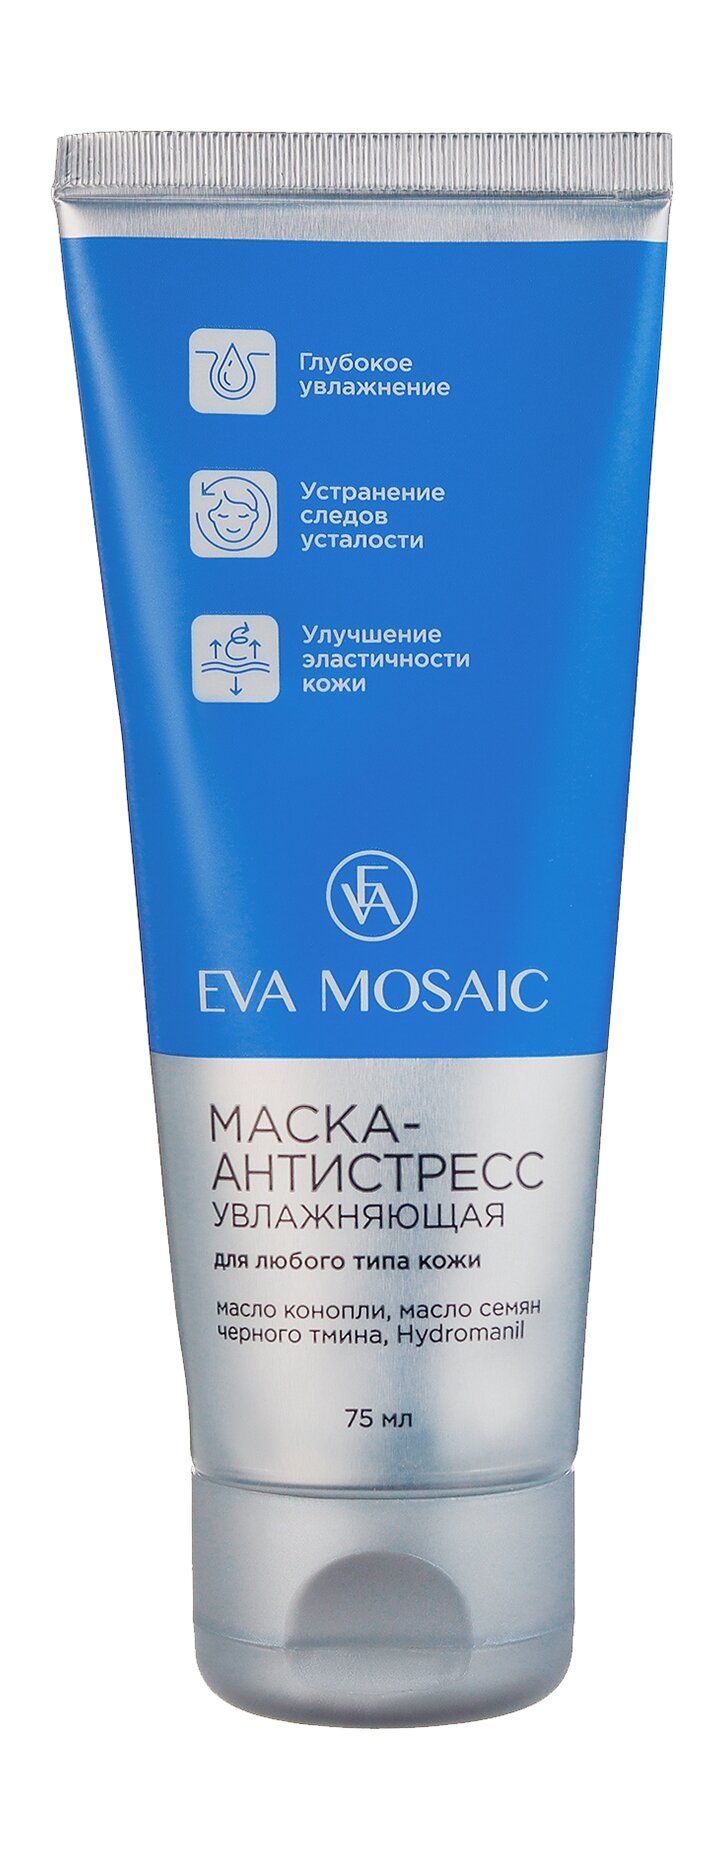 EVA MOSAIC Маска-антистресс увлажняющая для любого типа кожи, марка «Eva Mosaic», 75 мл, 4690595051370